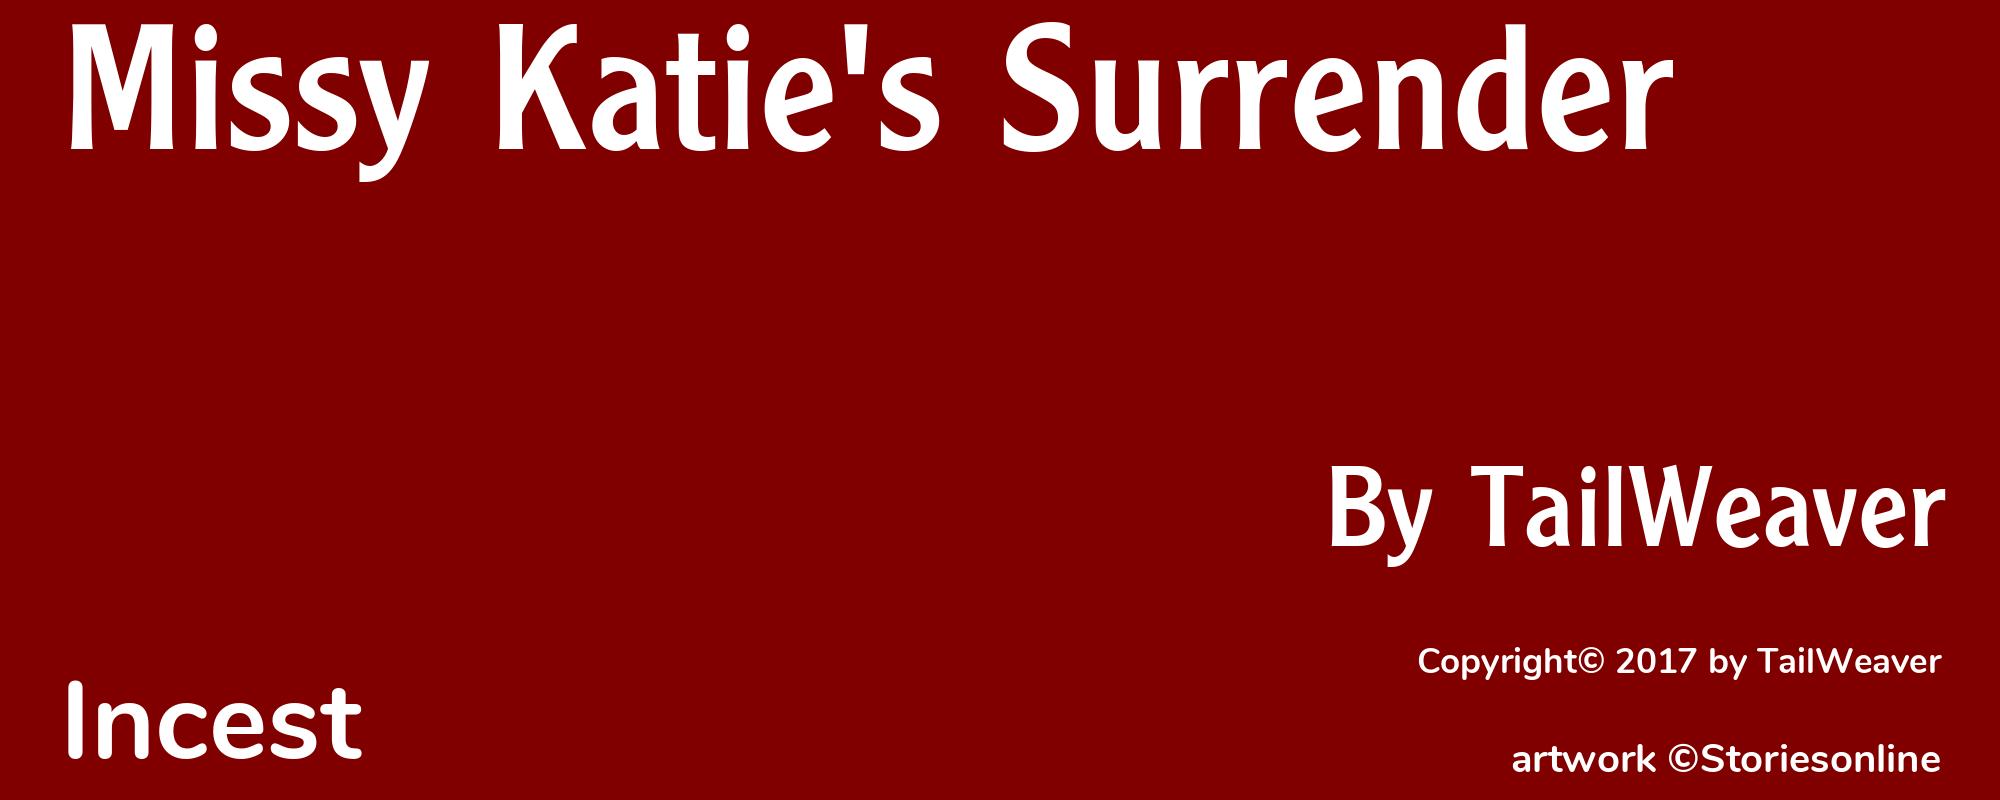 Missy Katie's Surrender - Cover